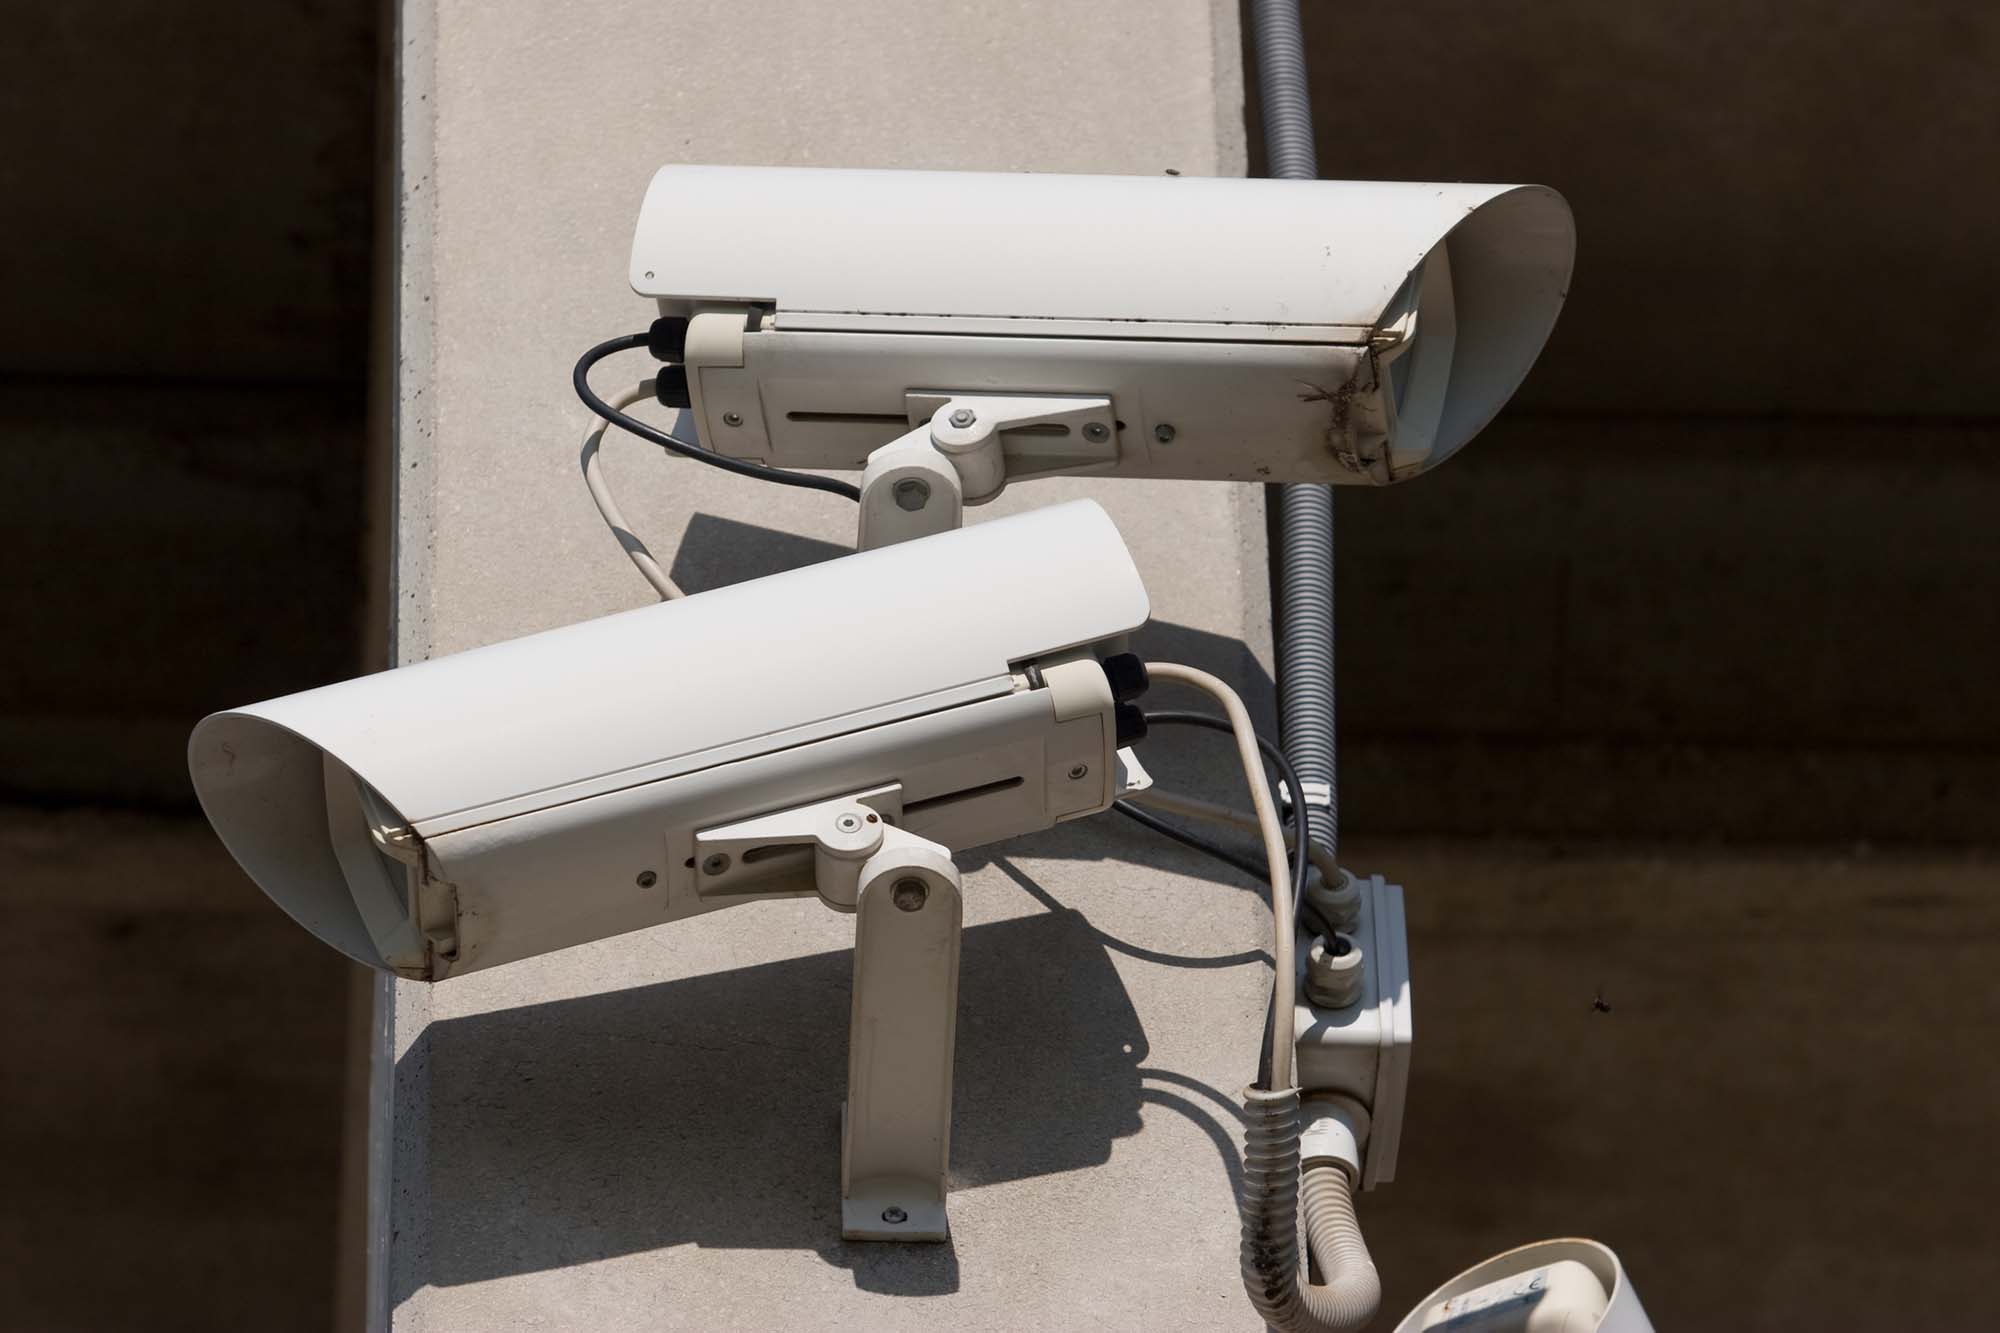 2 CCTV cameras on a post